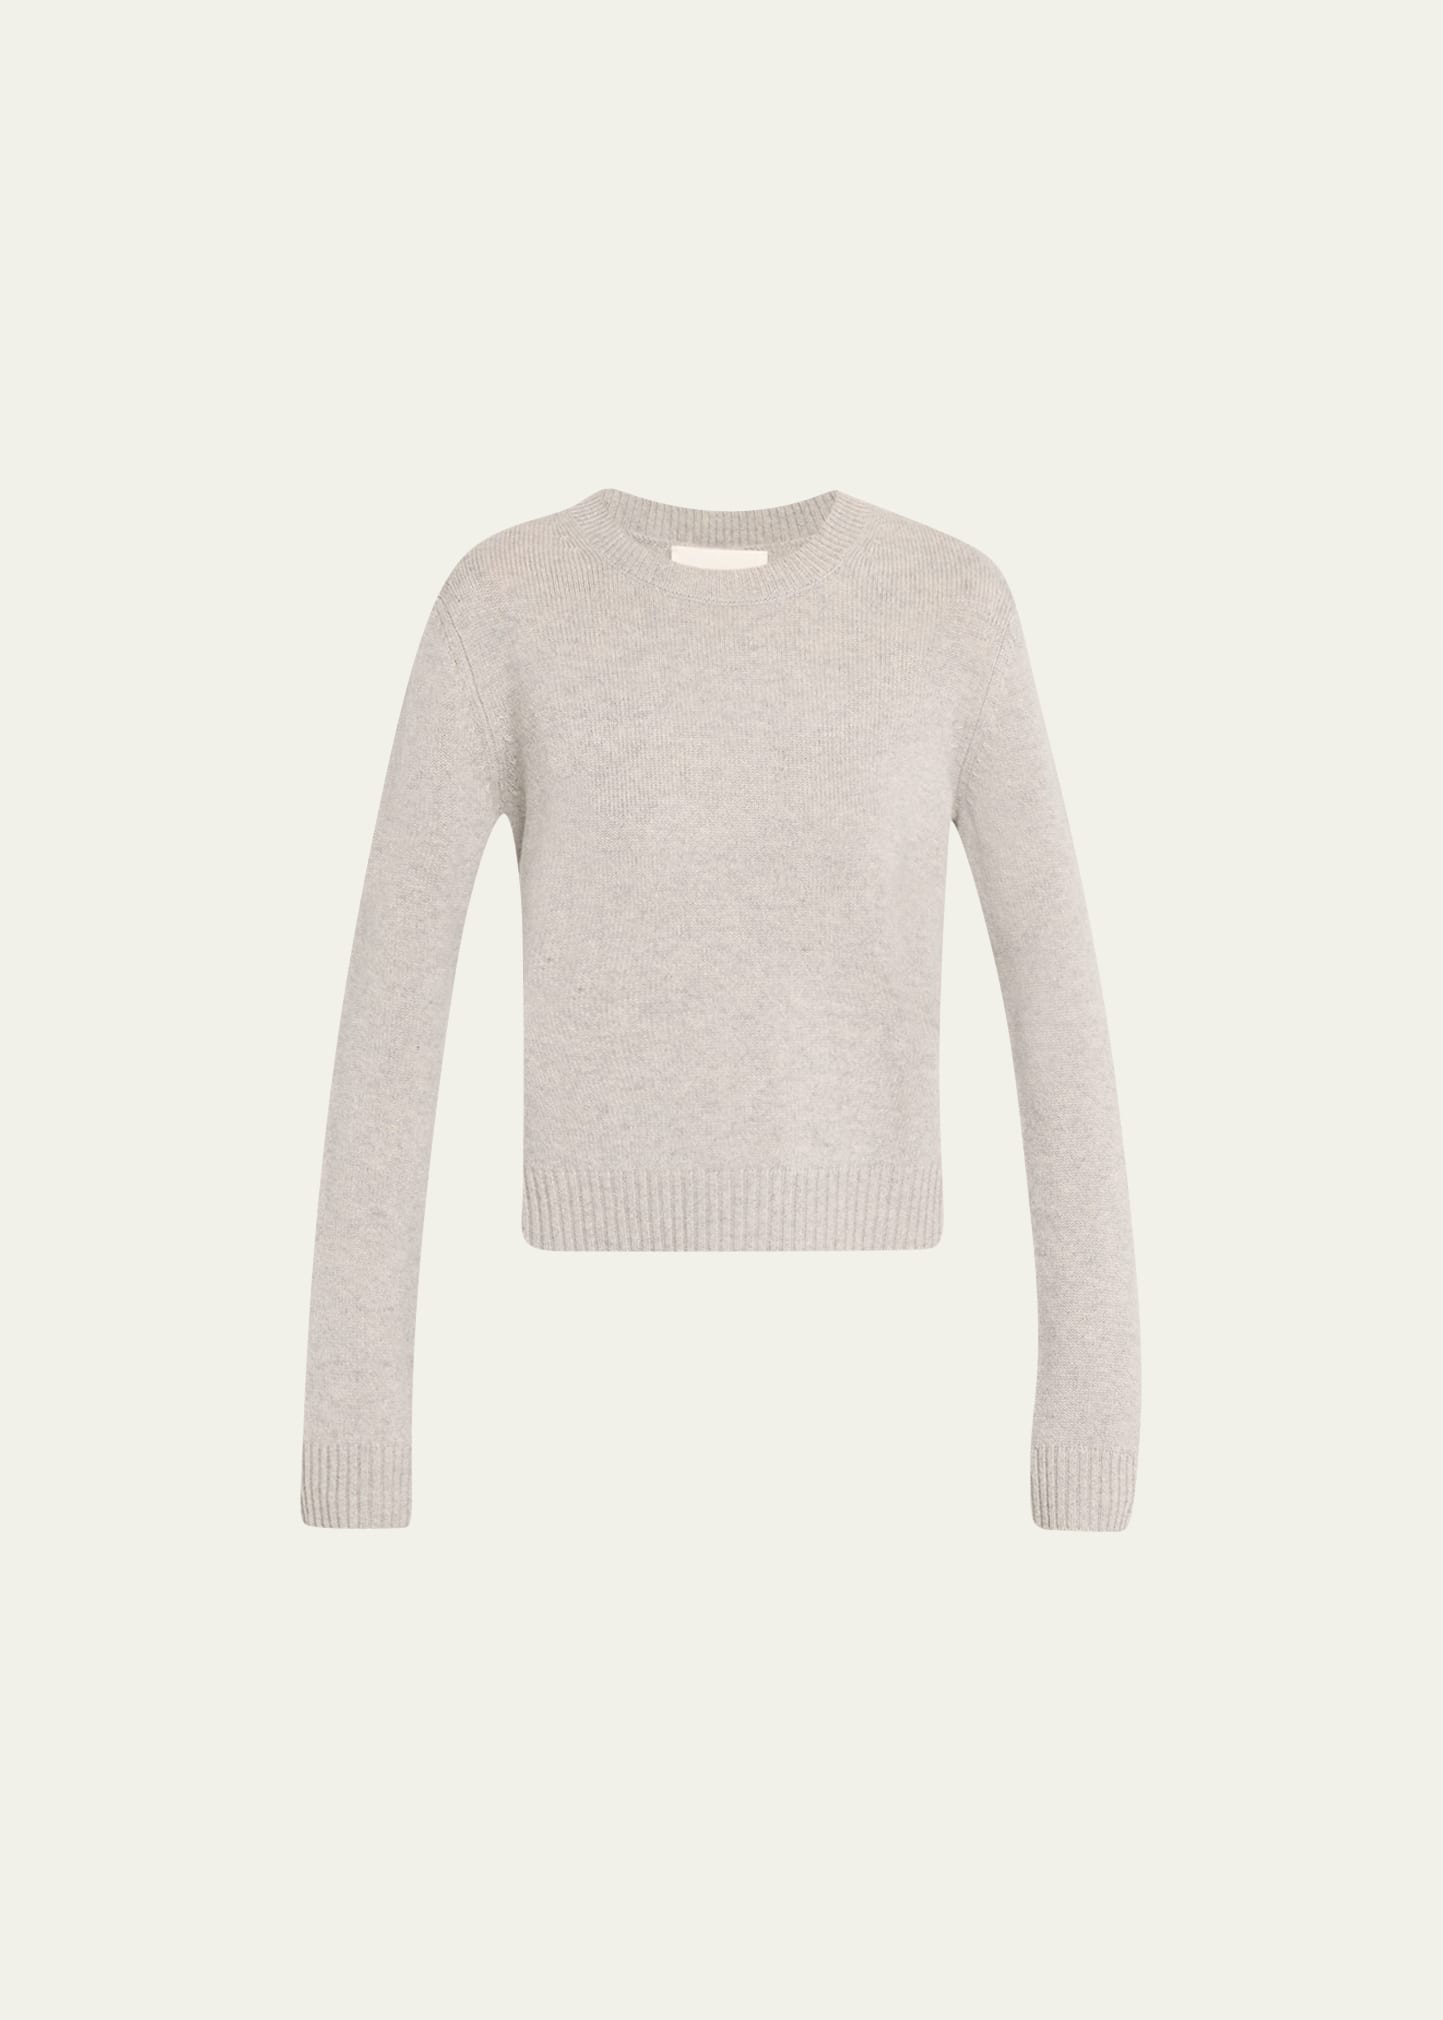 Designer Sweaters for Women